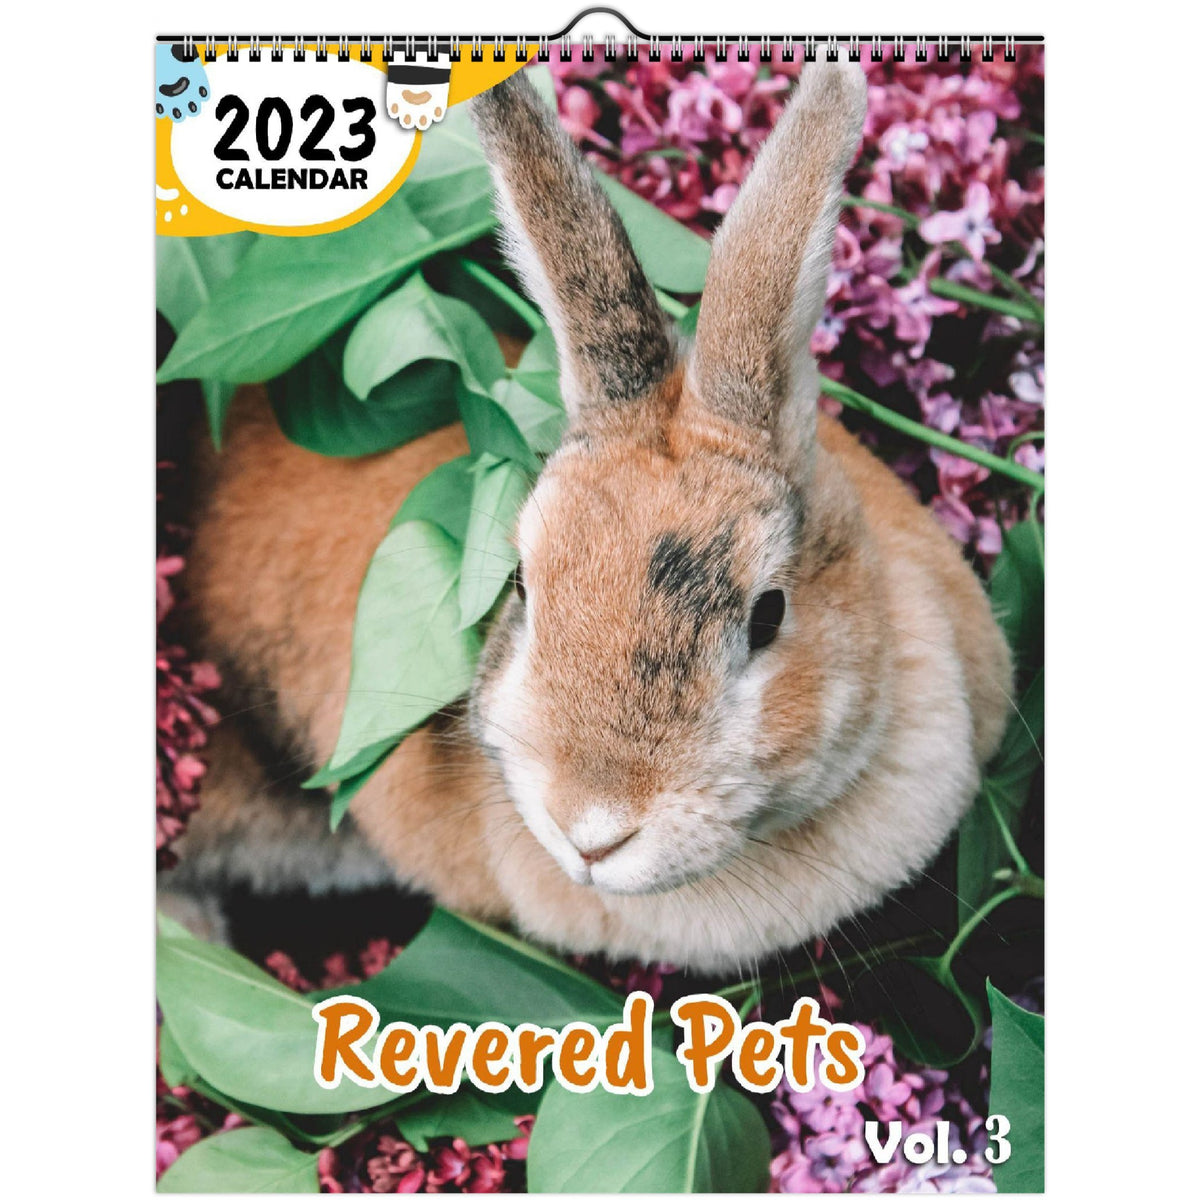 Revered Pets Volume Three 2023 Wall Calendar The Blissful Birder